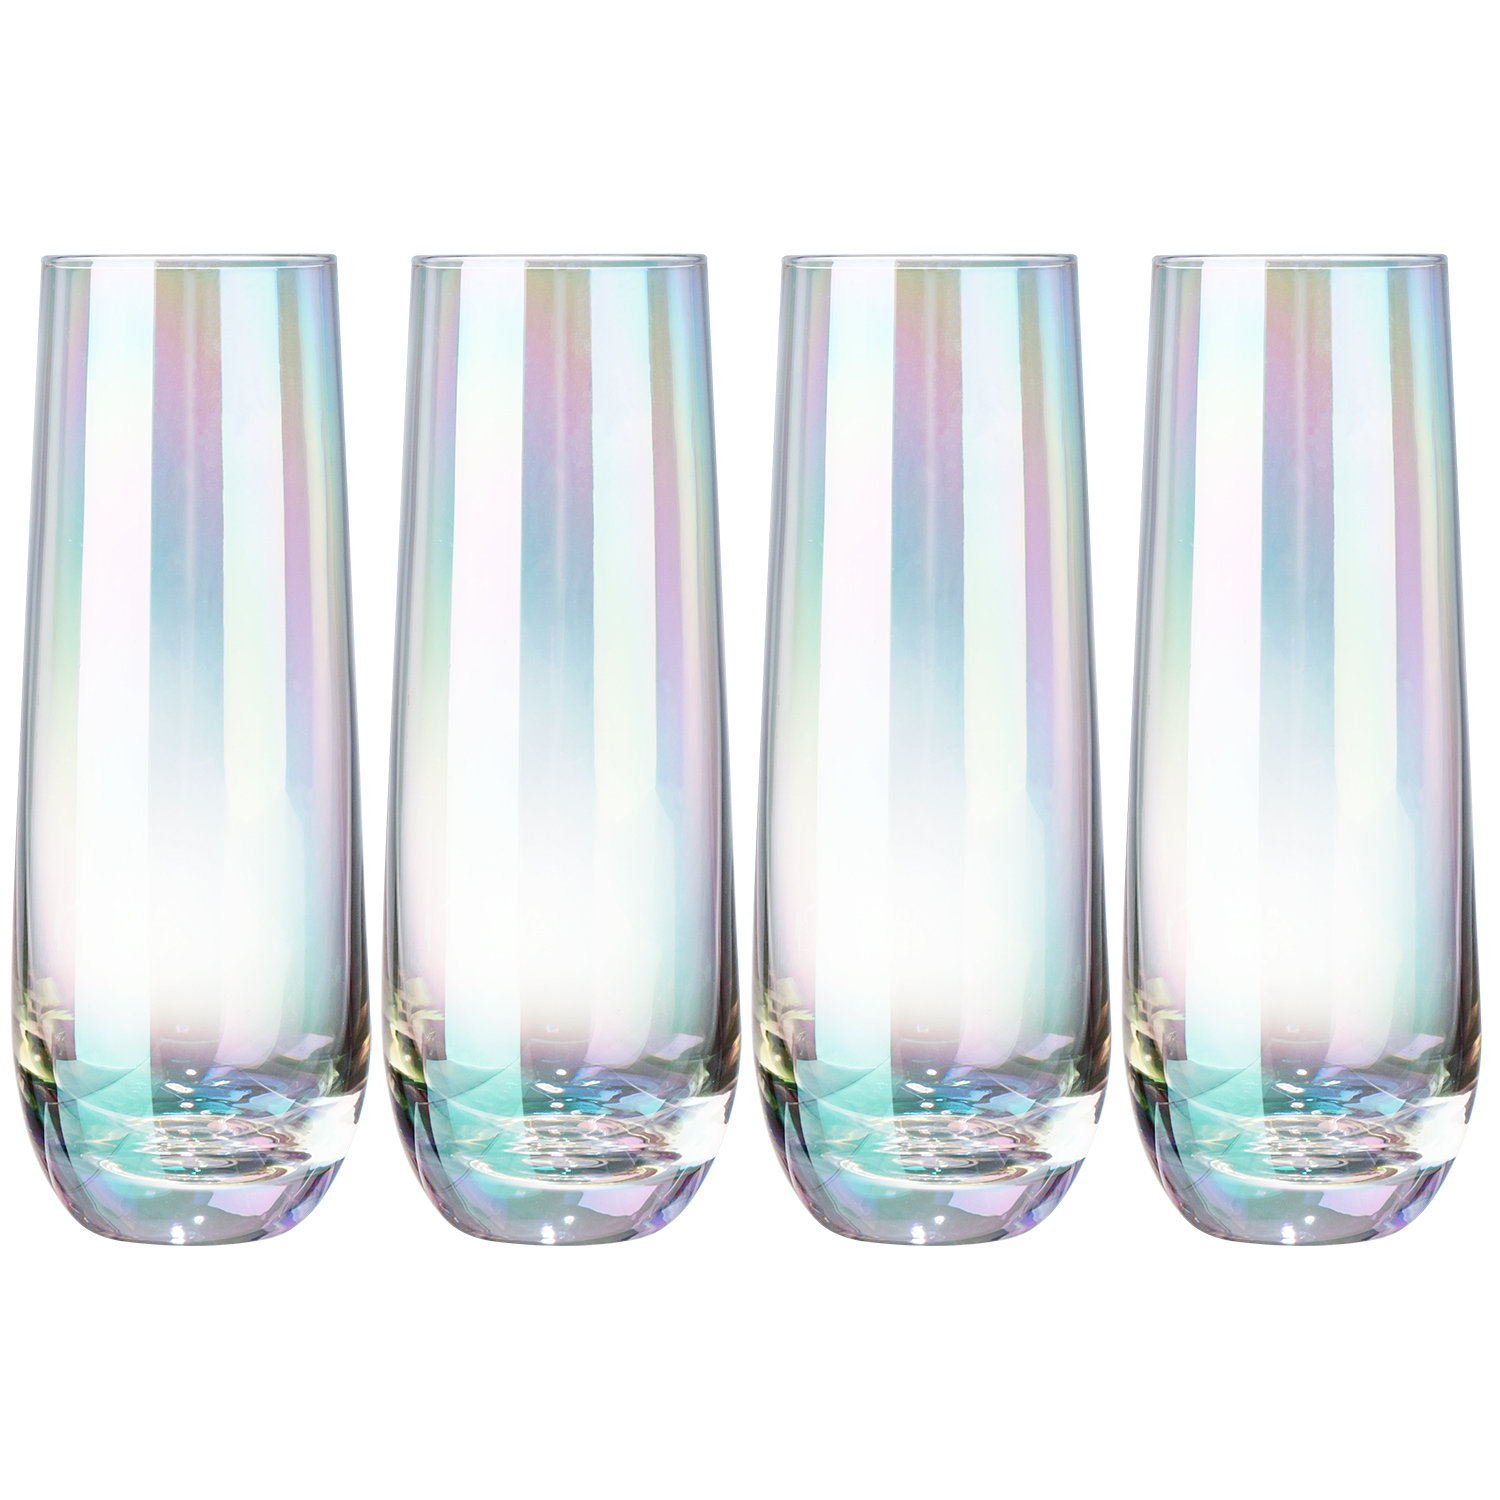 JoyJolt Milo 9.4 oz. Clear Crystal Stemless Champagne Flute Glass